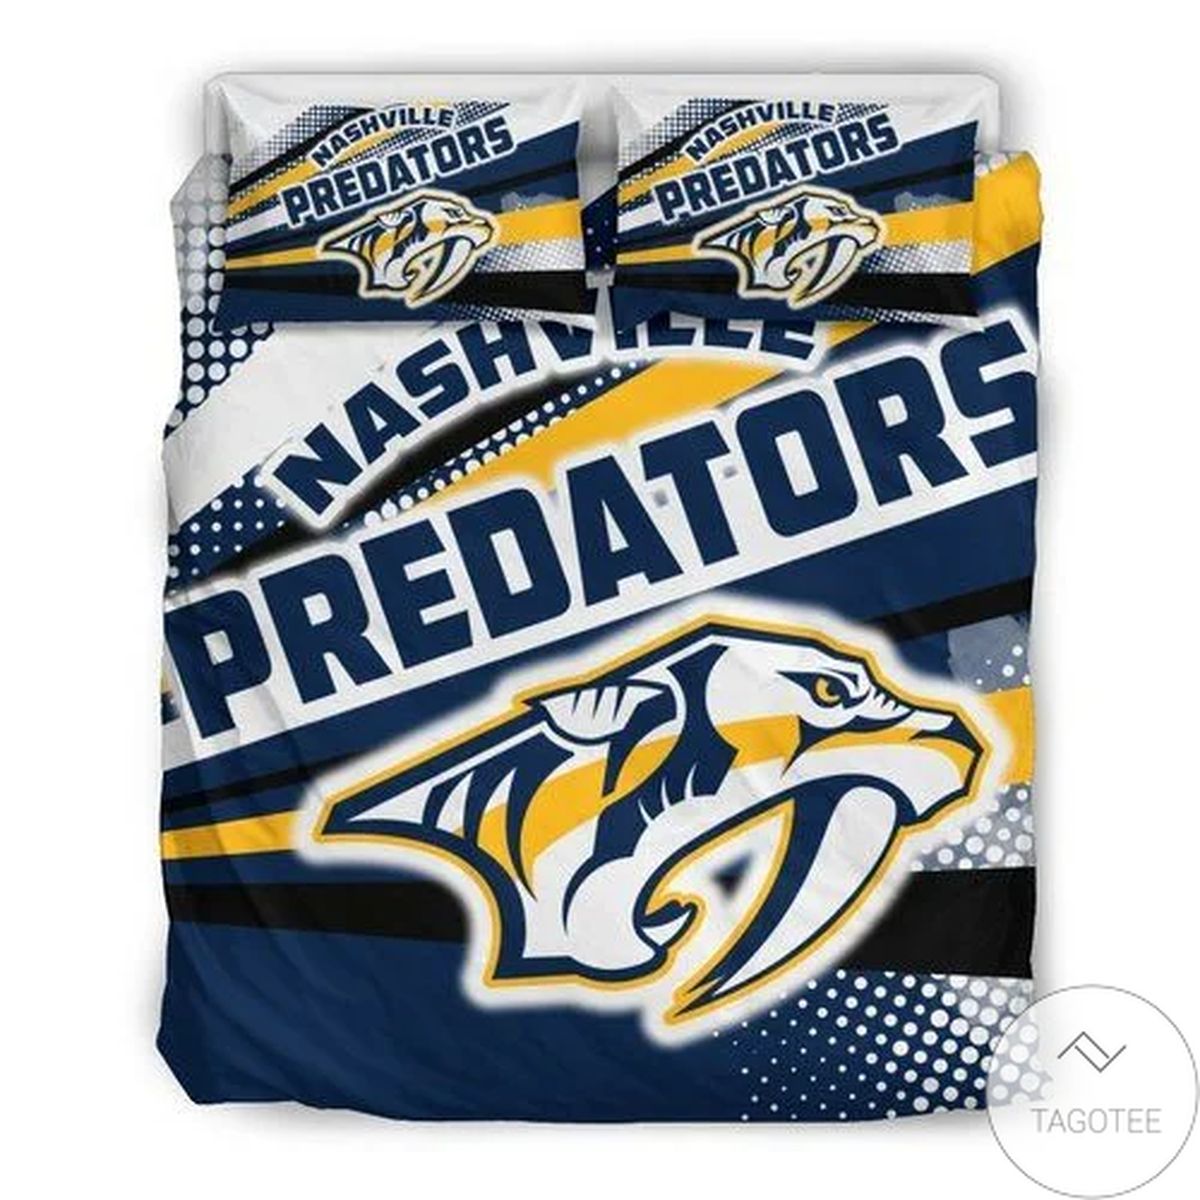 Amazing Nashville Predators Logo Bedding Set